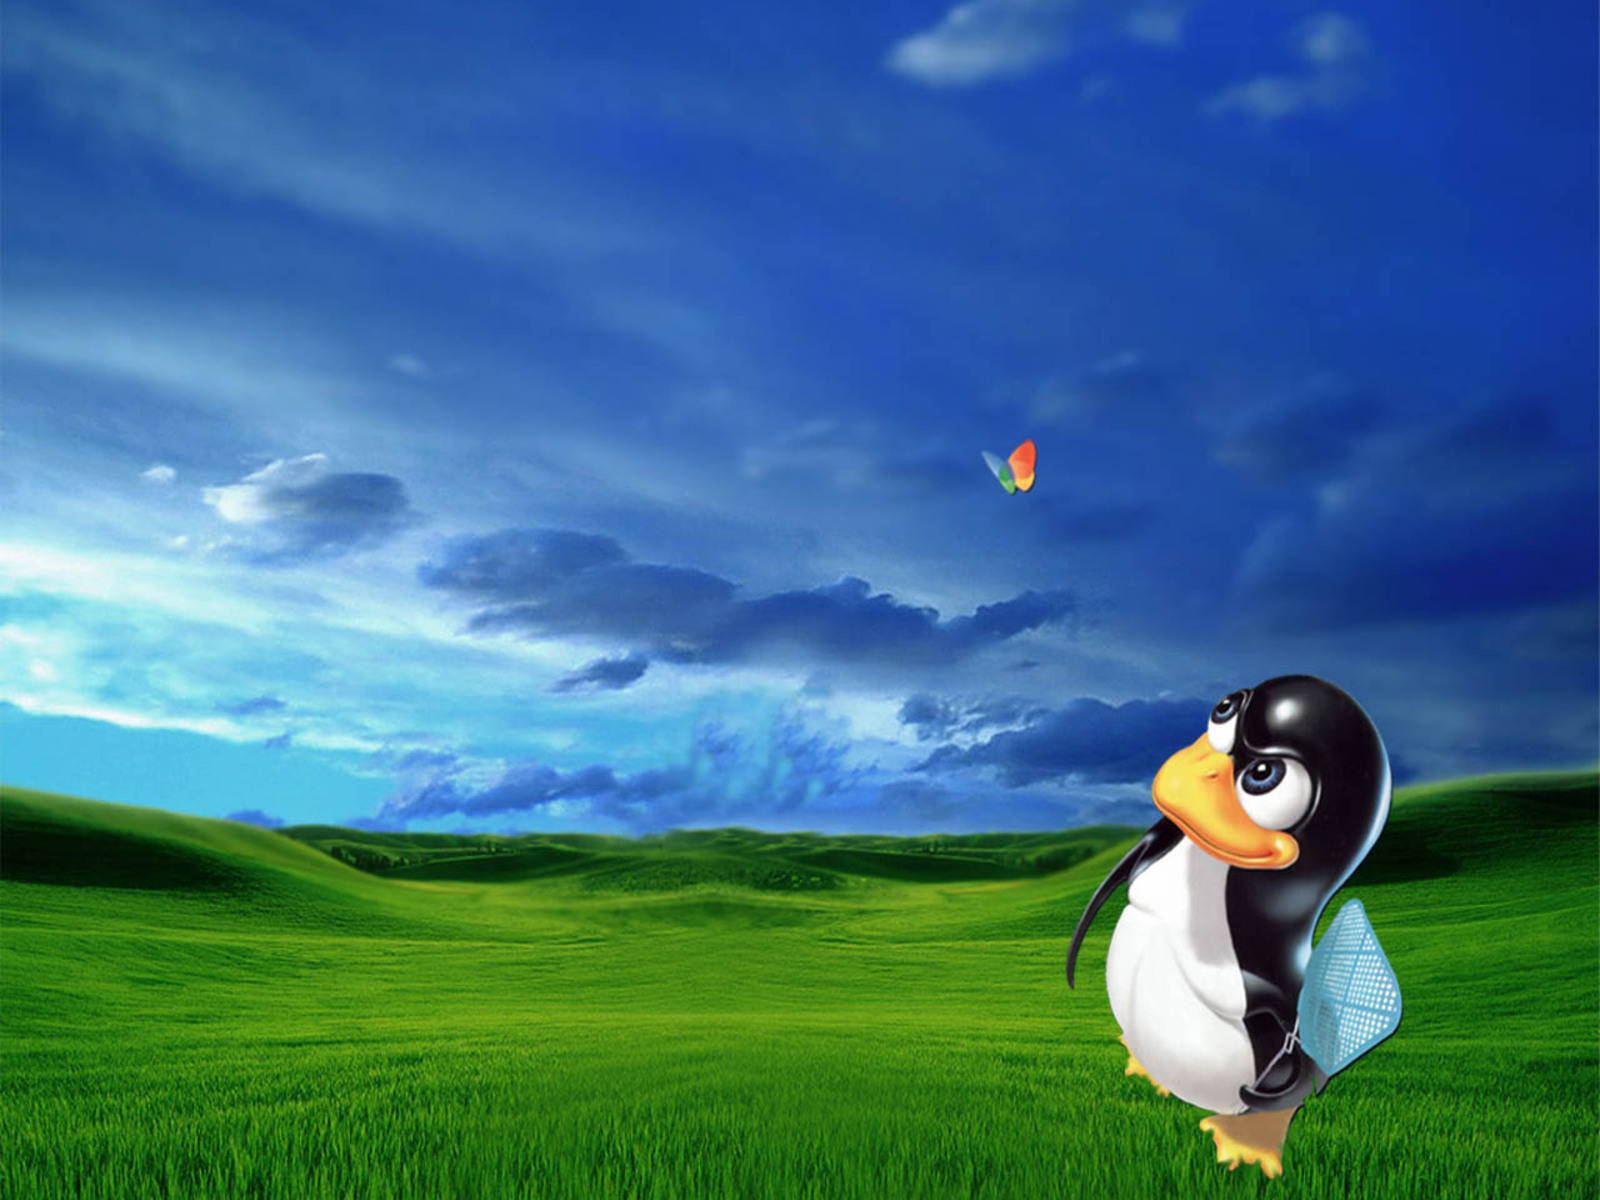 linux desktop wallpaper,bird,sky,flightless bird,natural landscape,animated cartoon